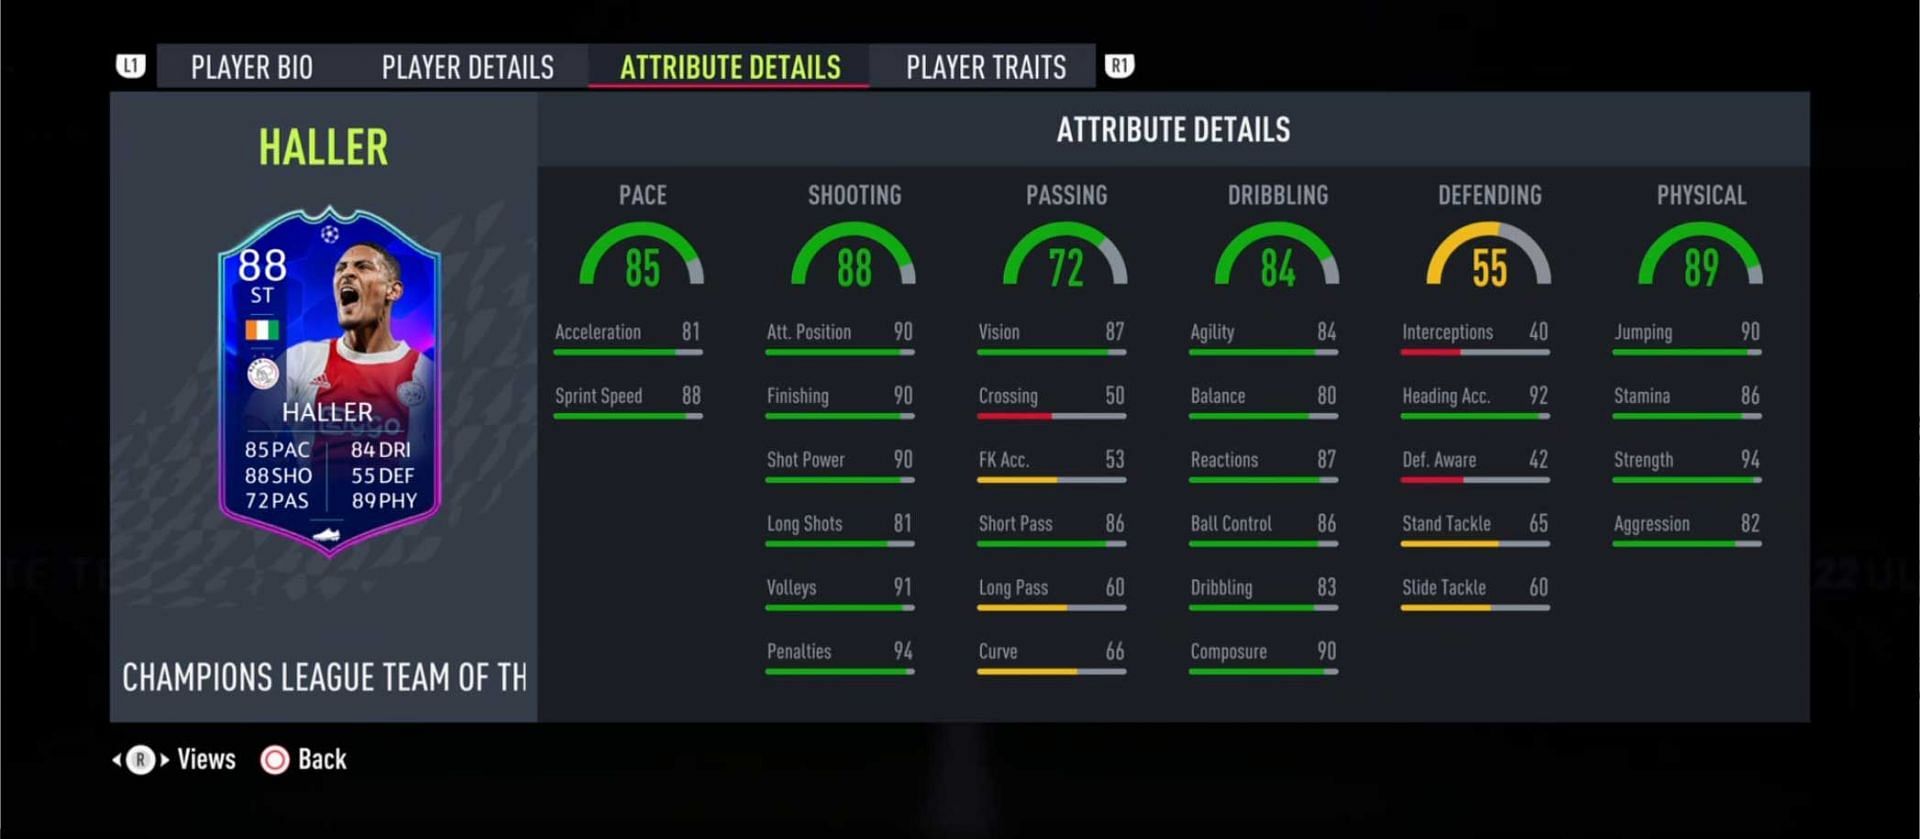 Haller TOTGS card stats in FIFA 22 (Image via FIFA 22)